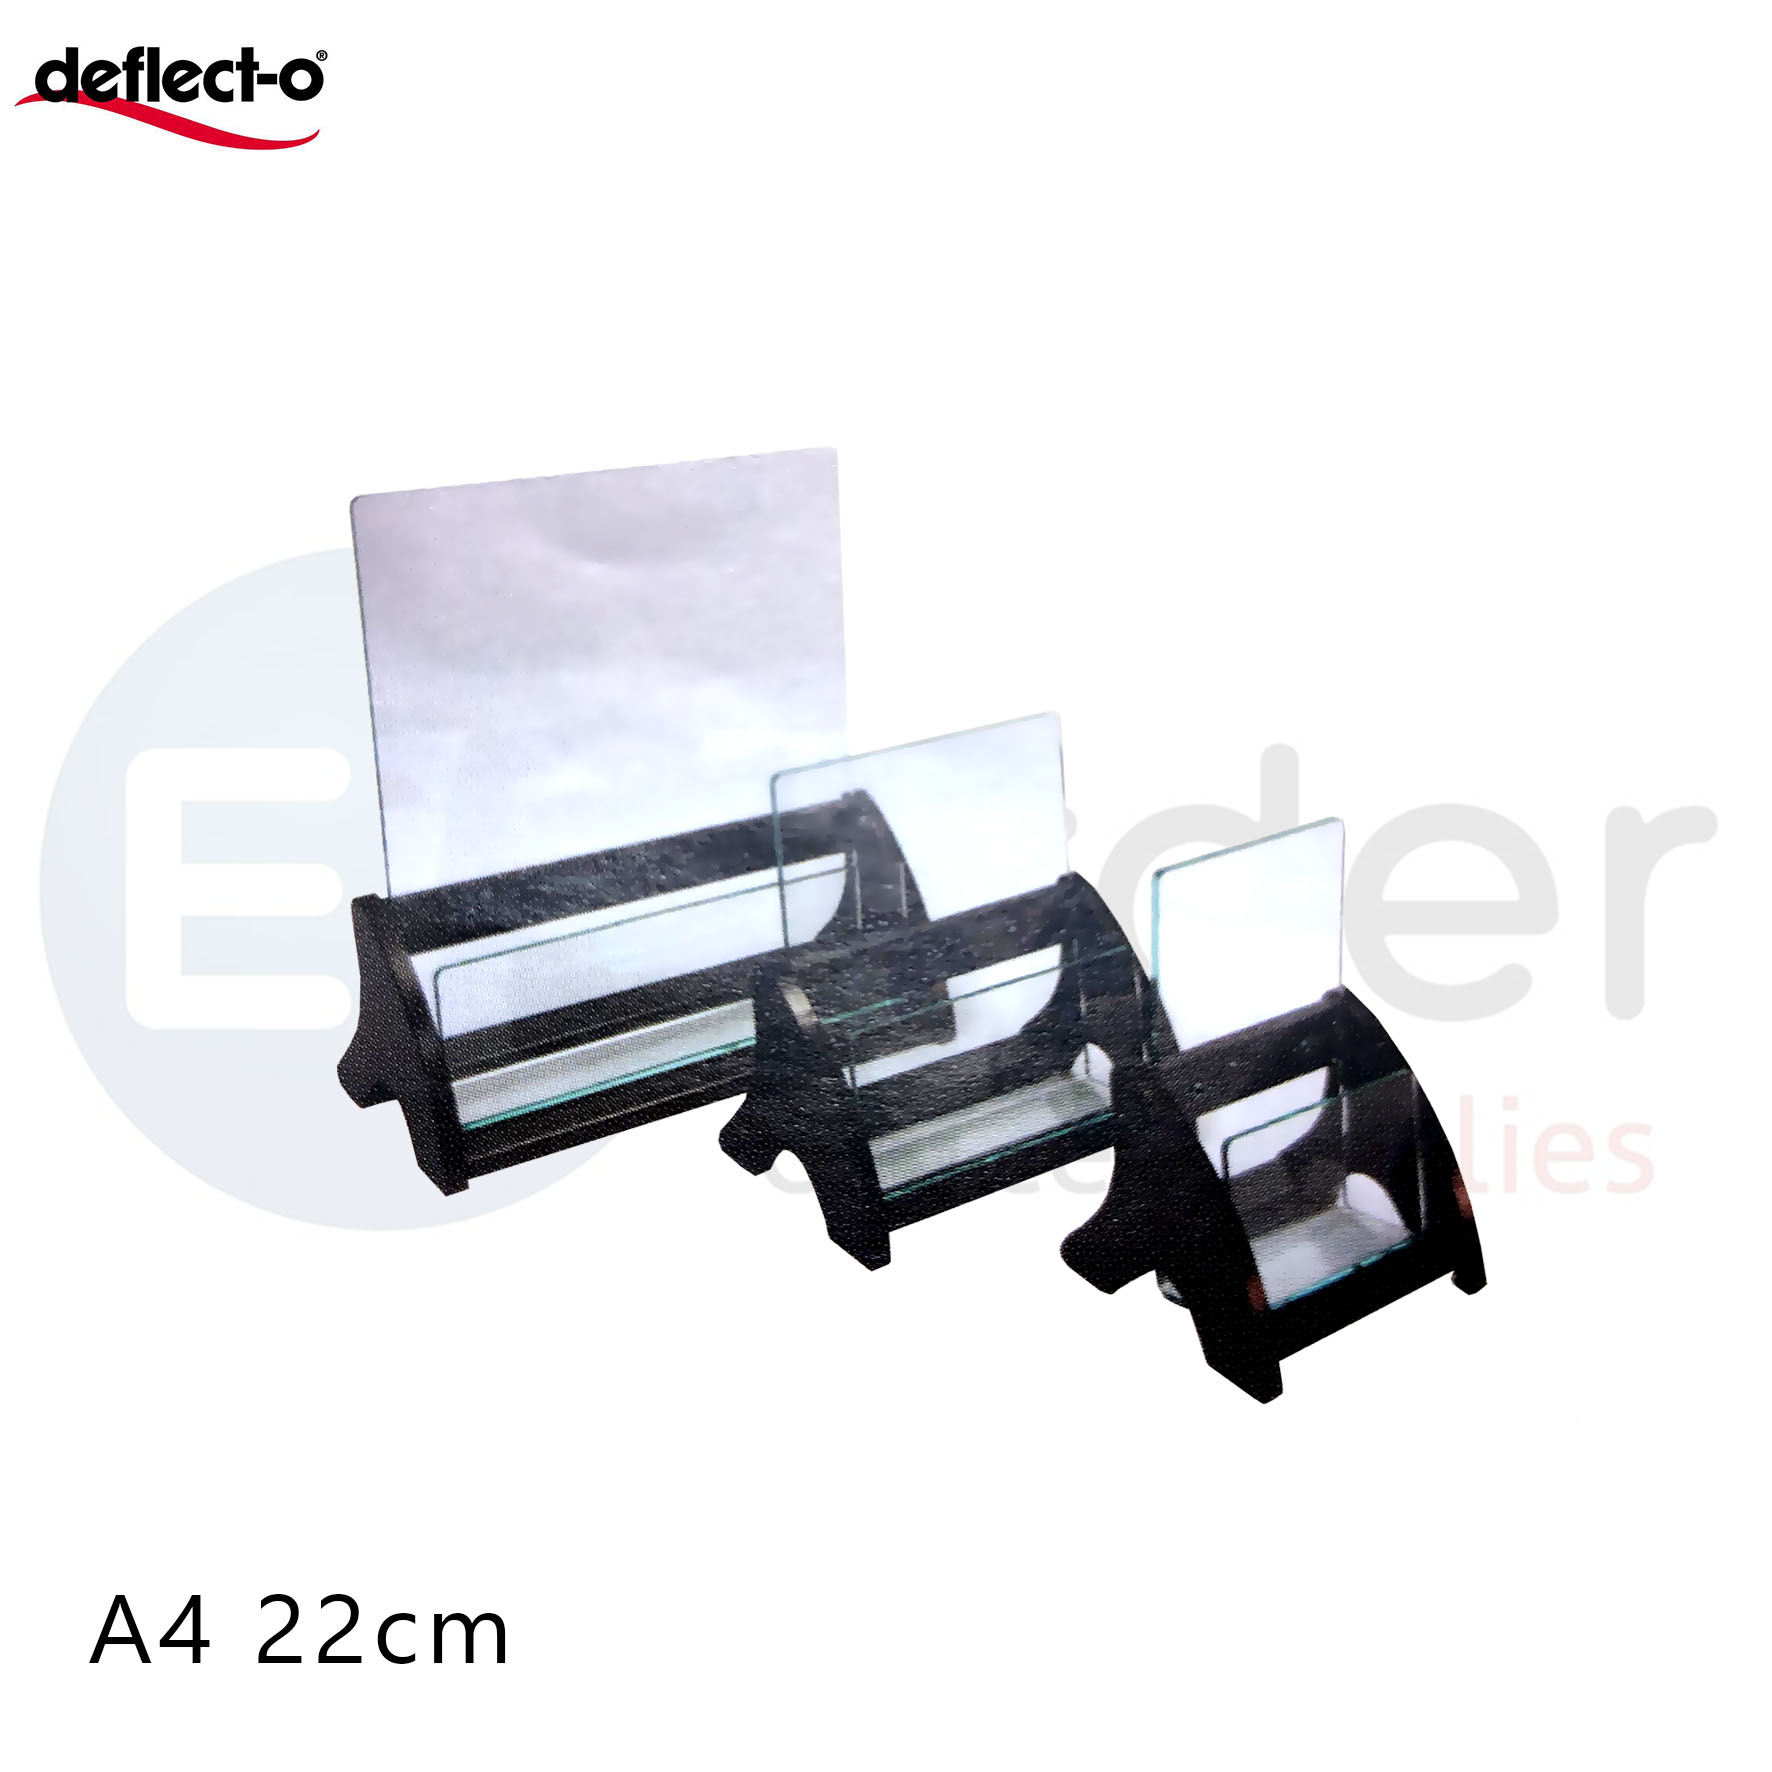 Deflecto wood&acrylicBrochure holder,A4